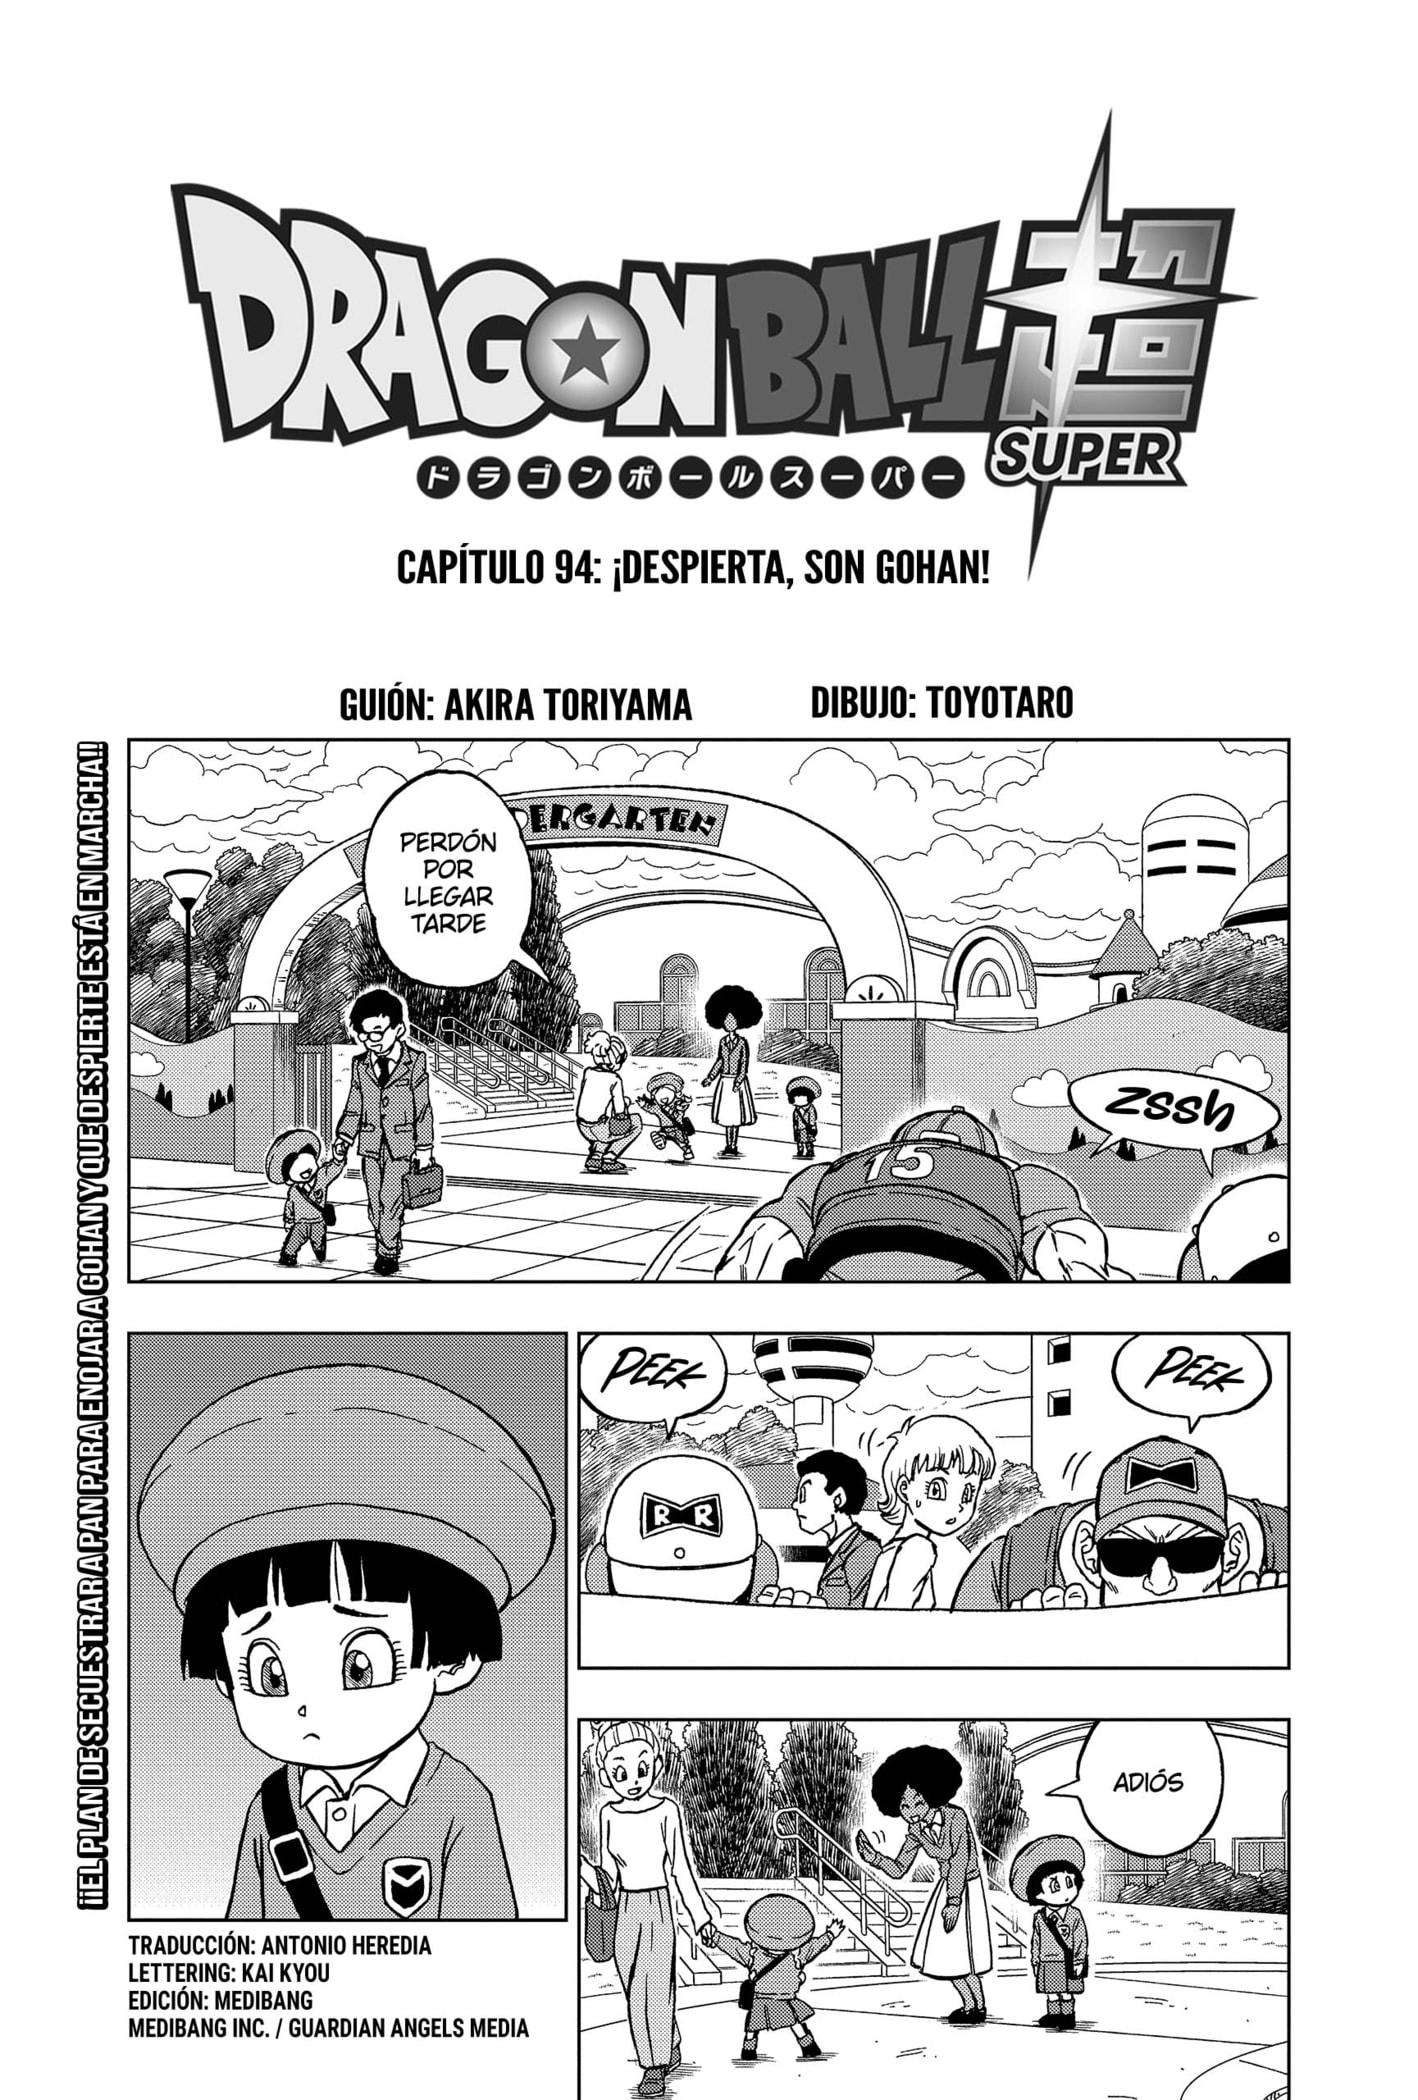 Dragon Ball Super: Fecha y hora del capítulo 94 del manga